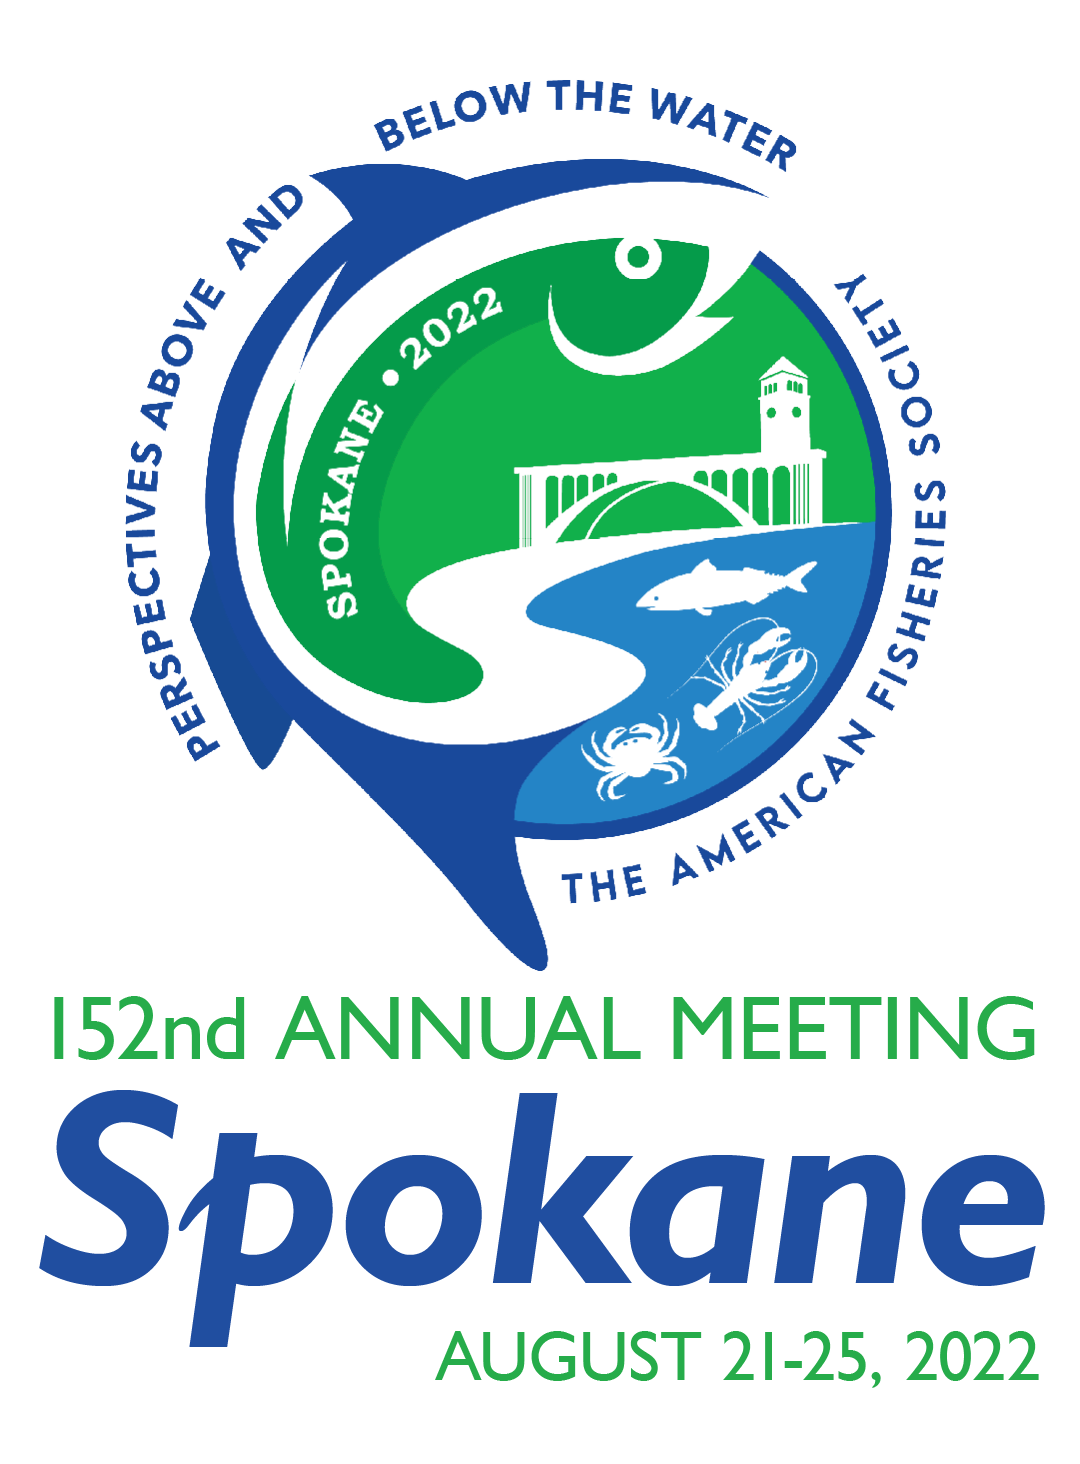 spokane logo vert transparent